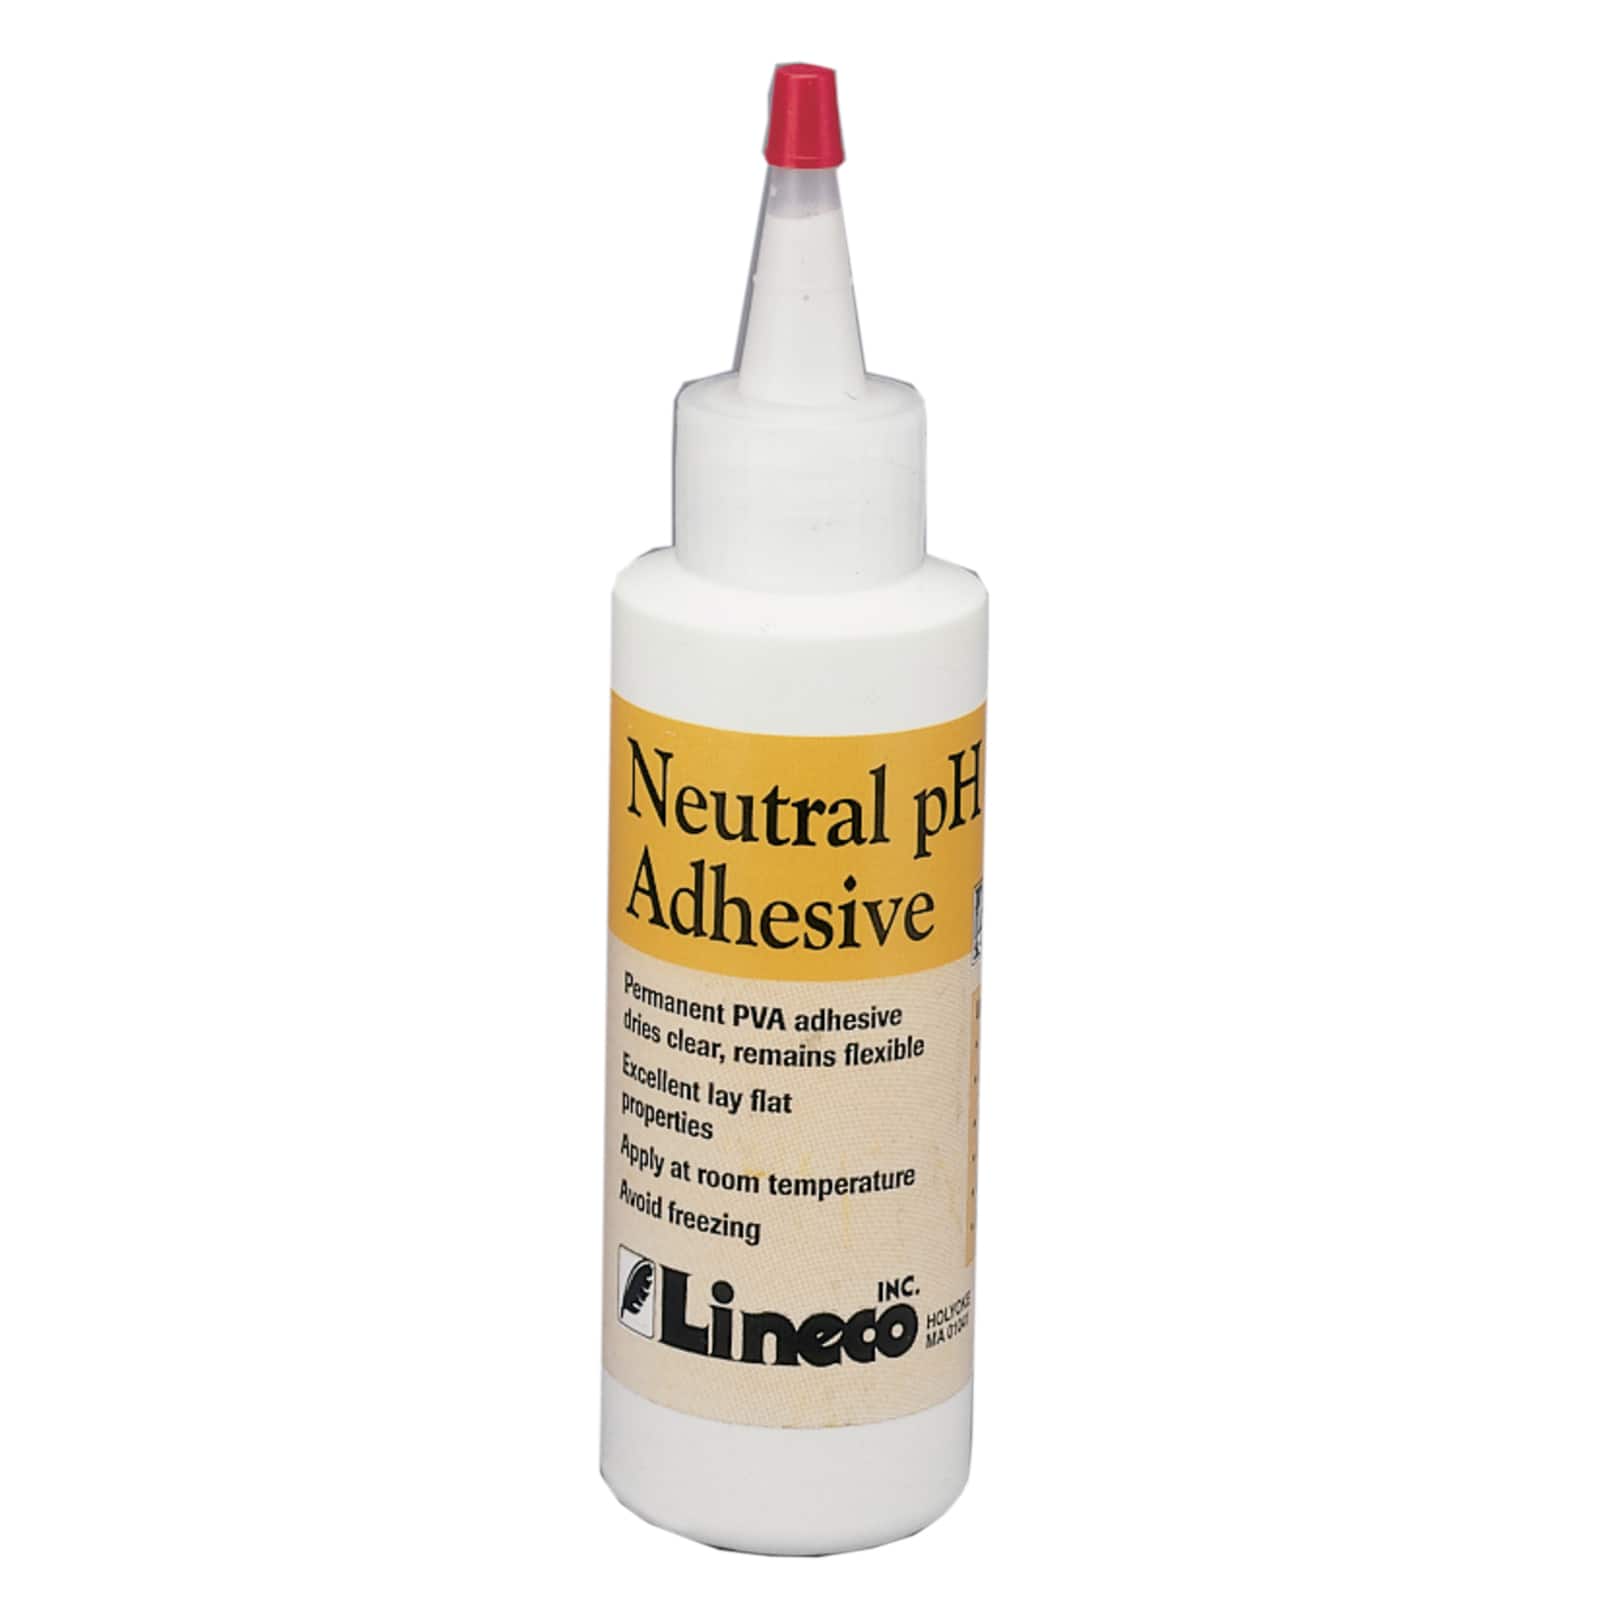 Lineco Adhesive Neutral PH 4 oz